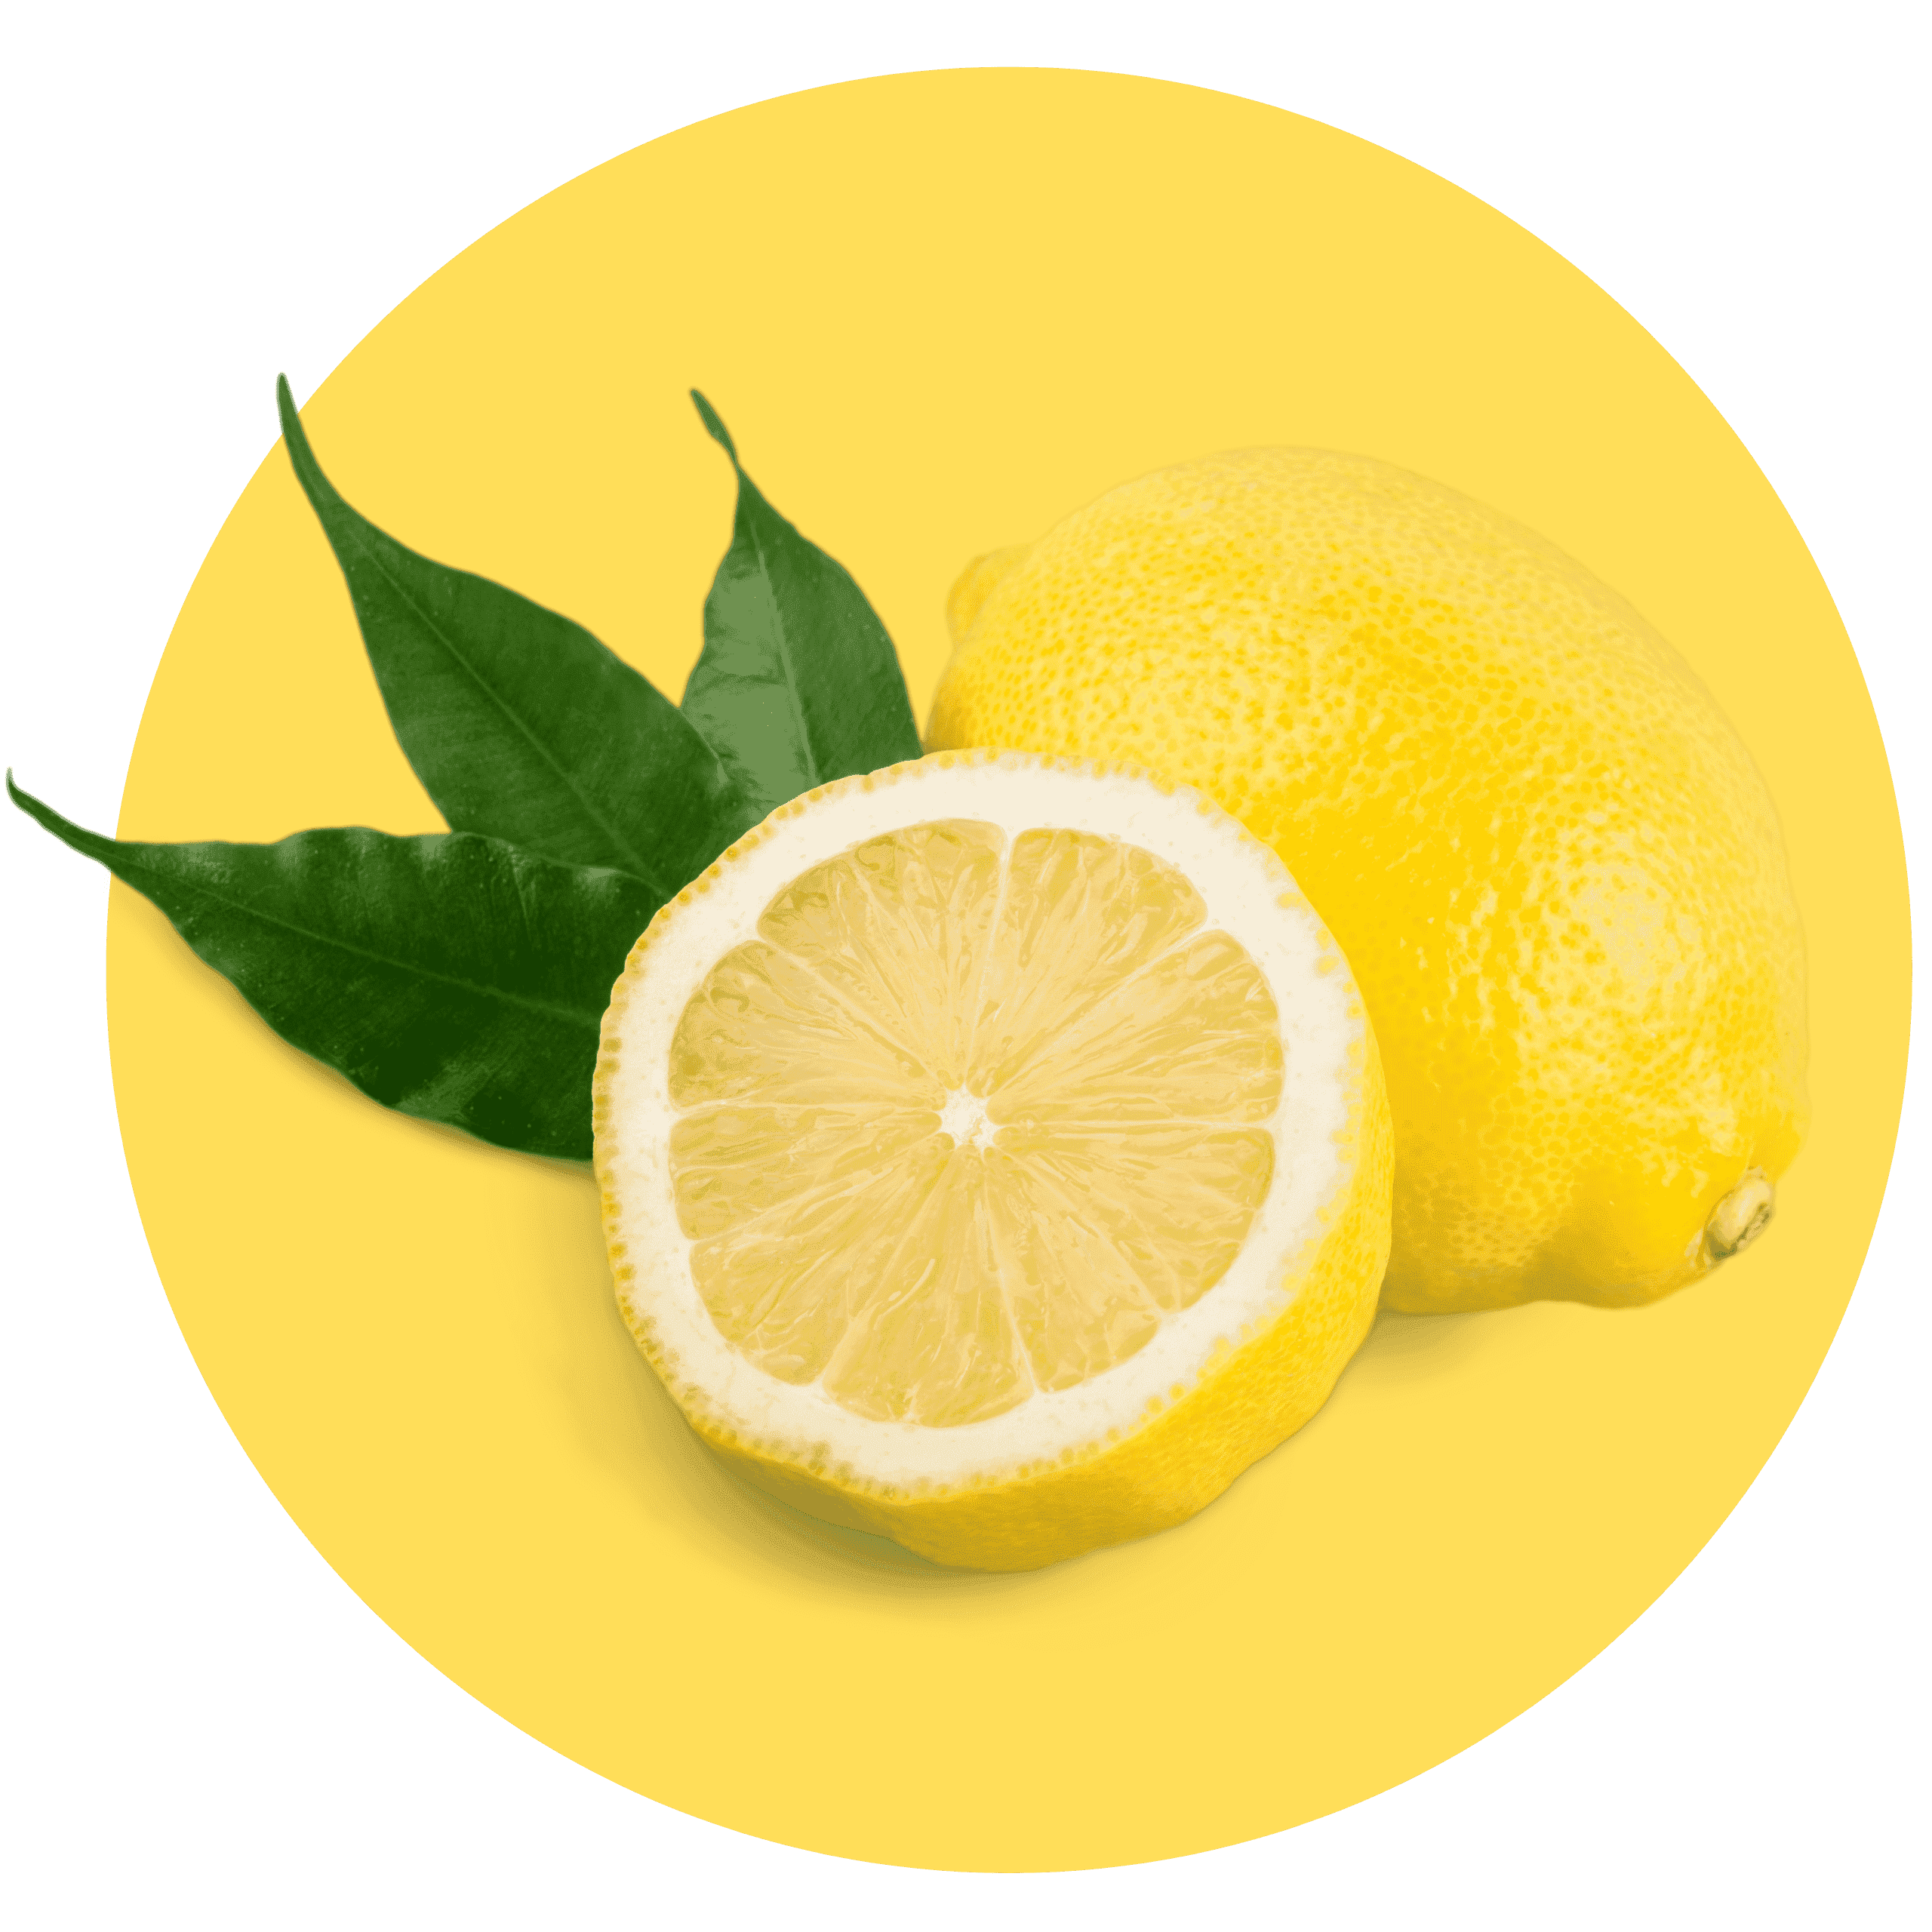 Graphic of a fresh lemon